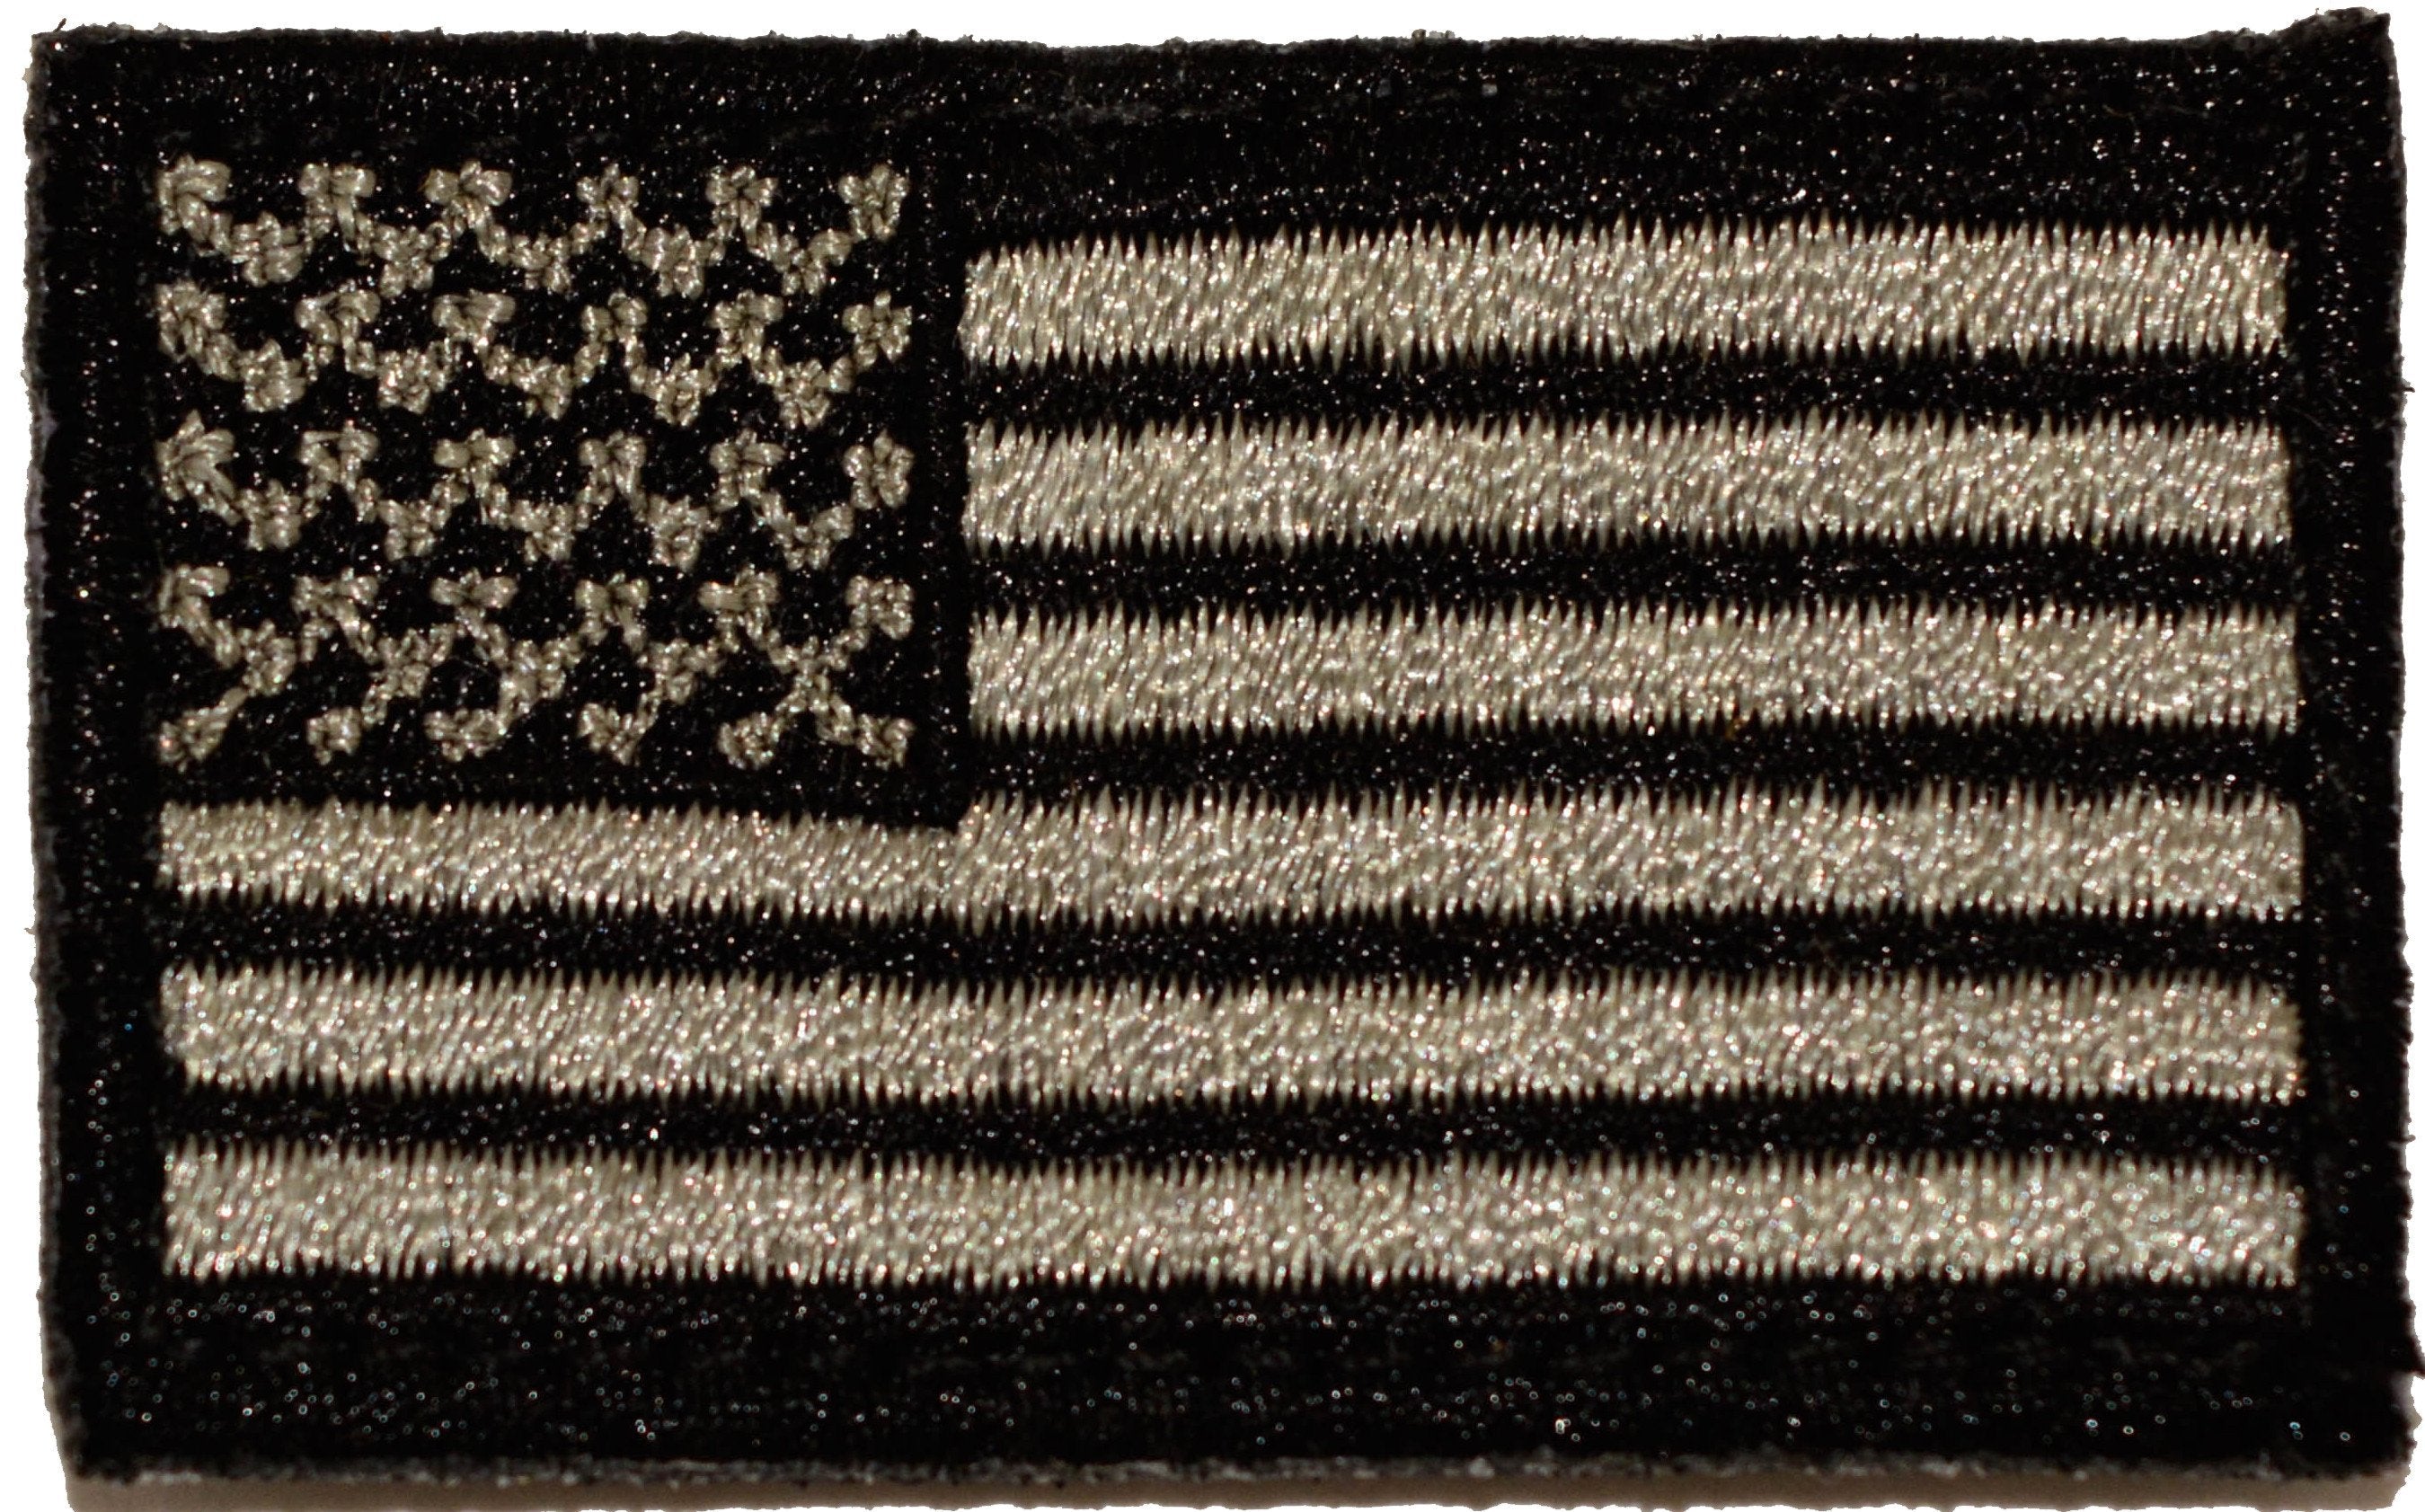 Mini USA Flag Patches - 1.5" x 2"